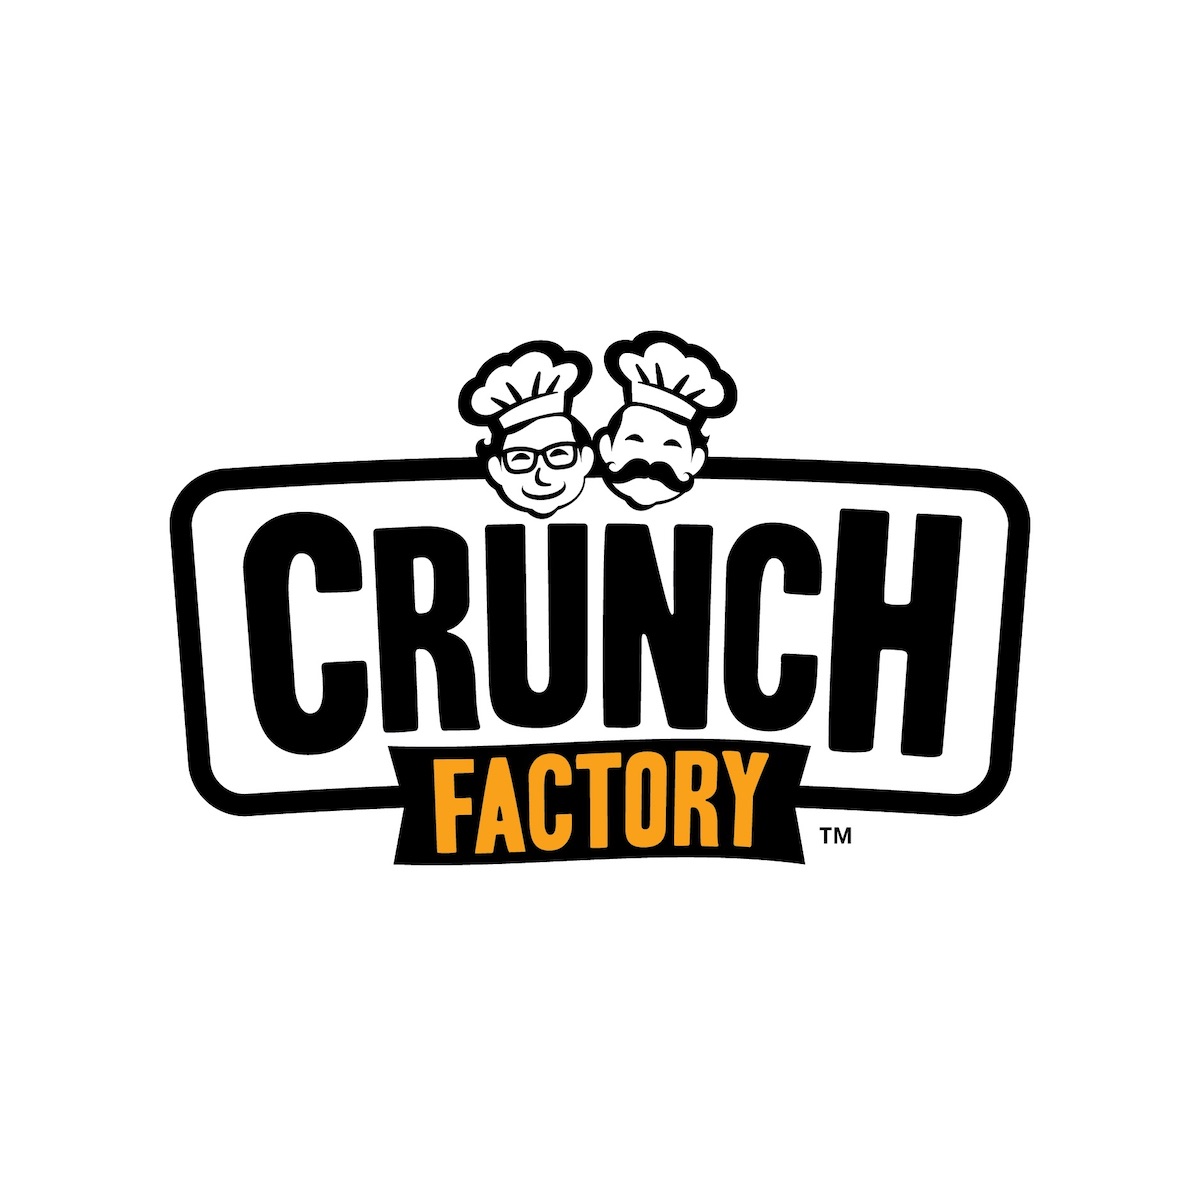 Crunch Factory logo.